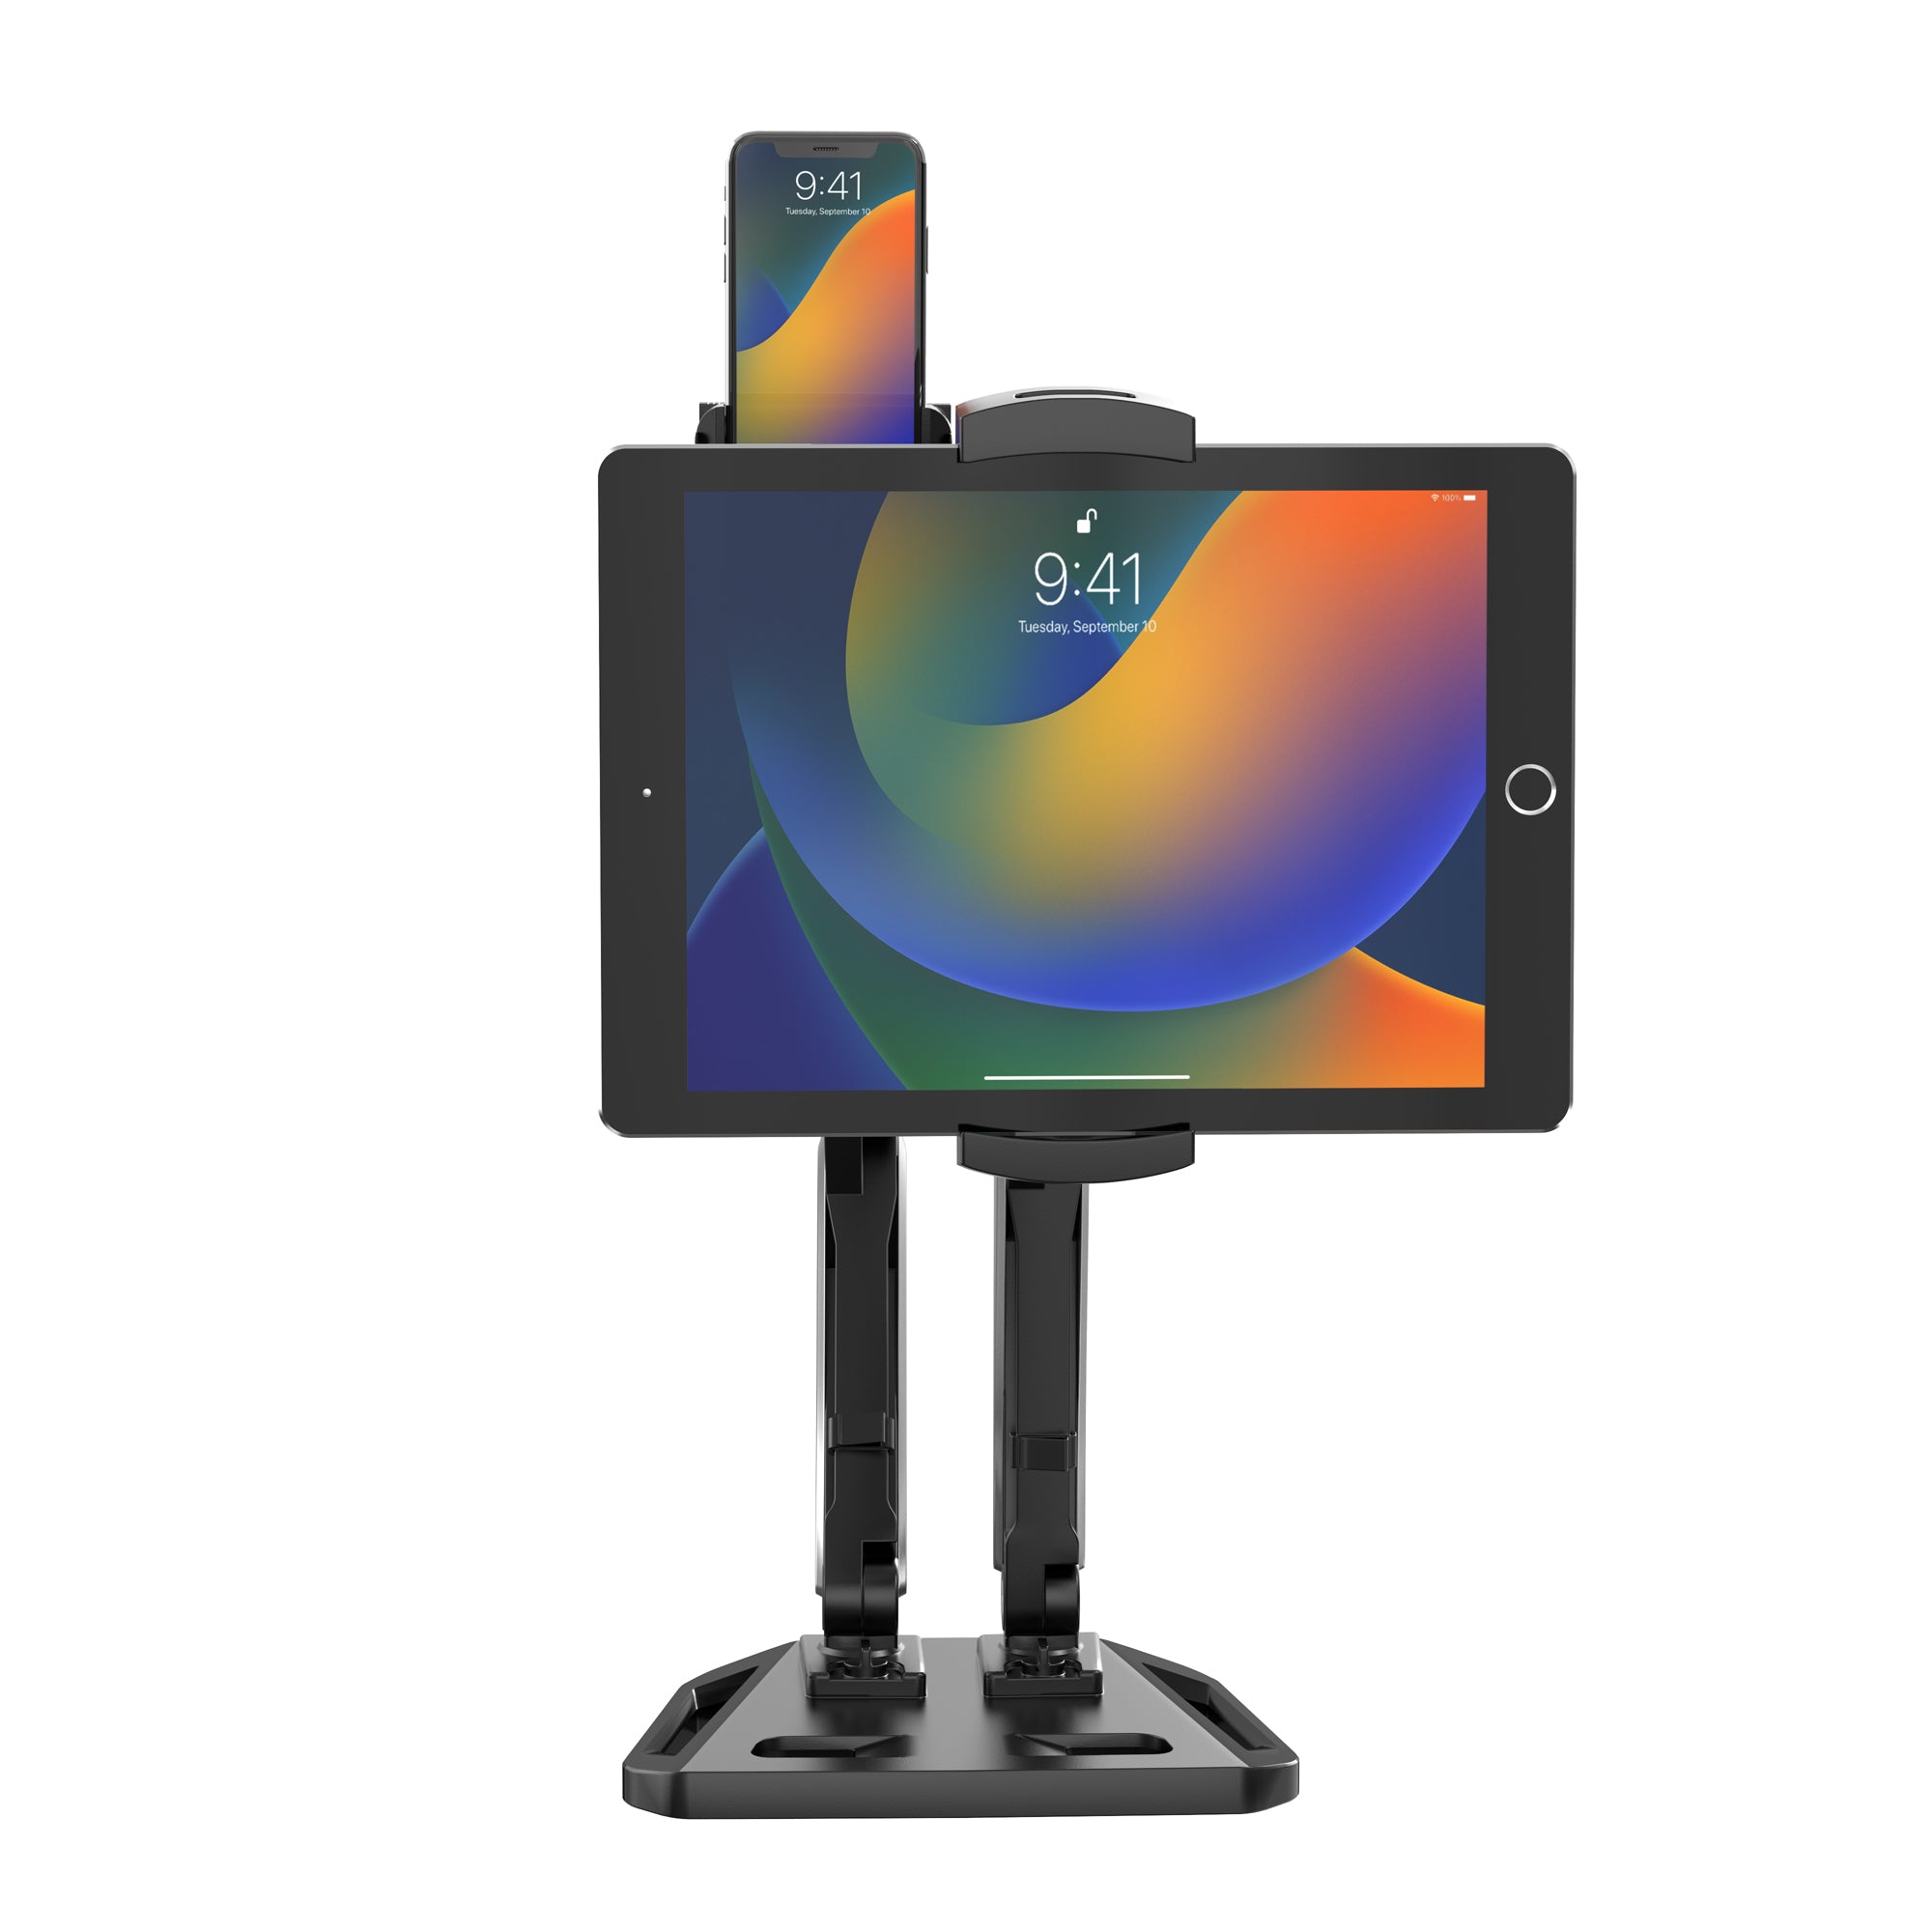 Universal Tablet and Phone Adjustable Desk Mount